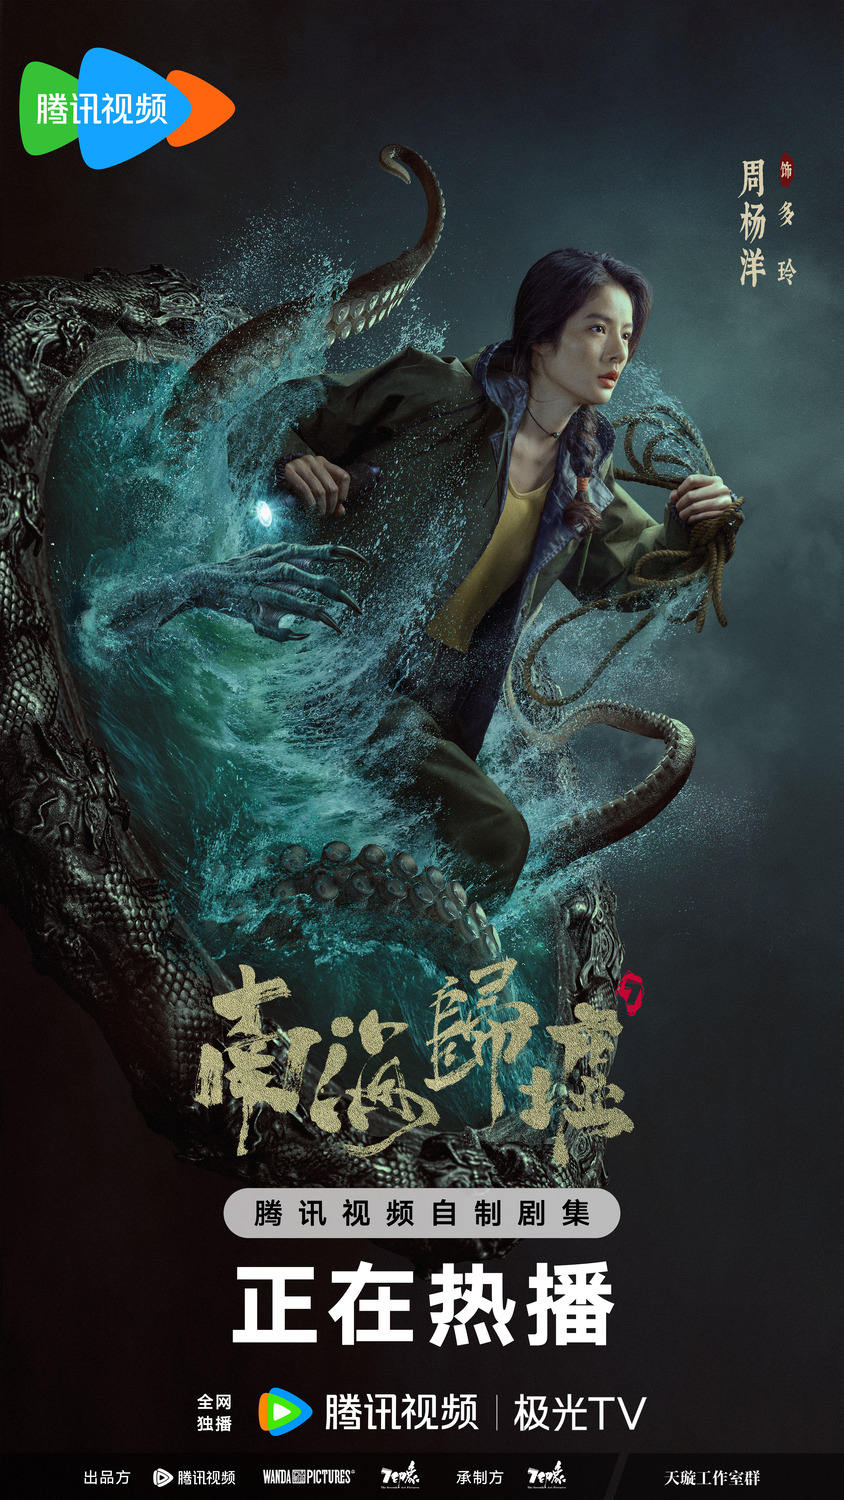 Extra Large TV Poster Image for Nan hai gui xu (#3 of 6)